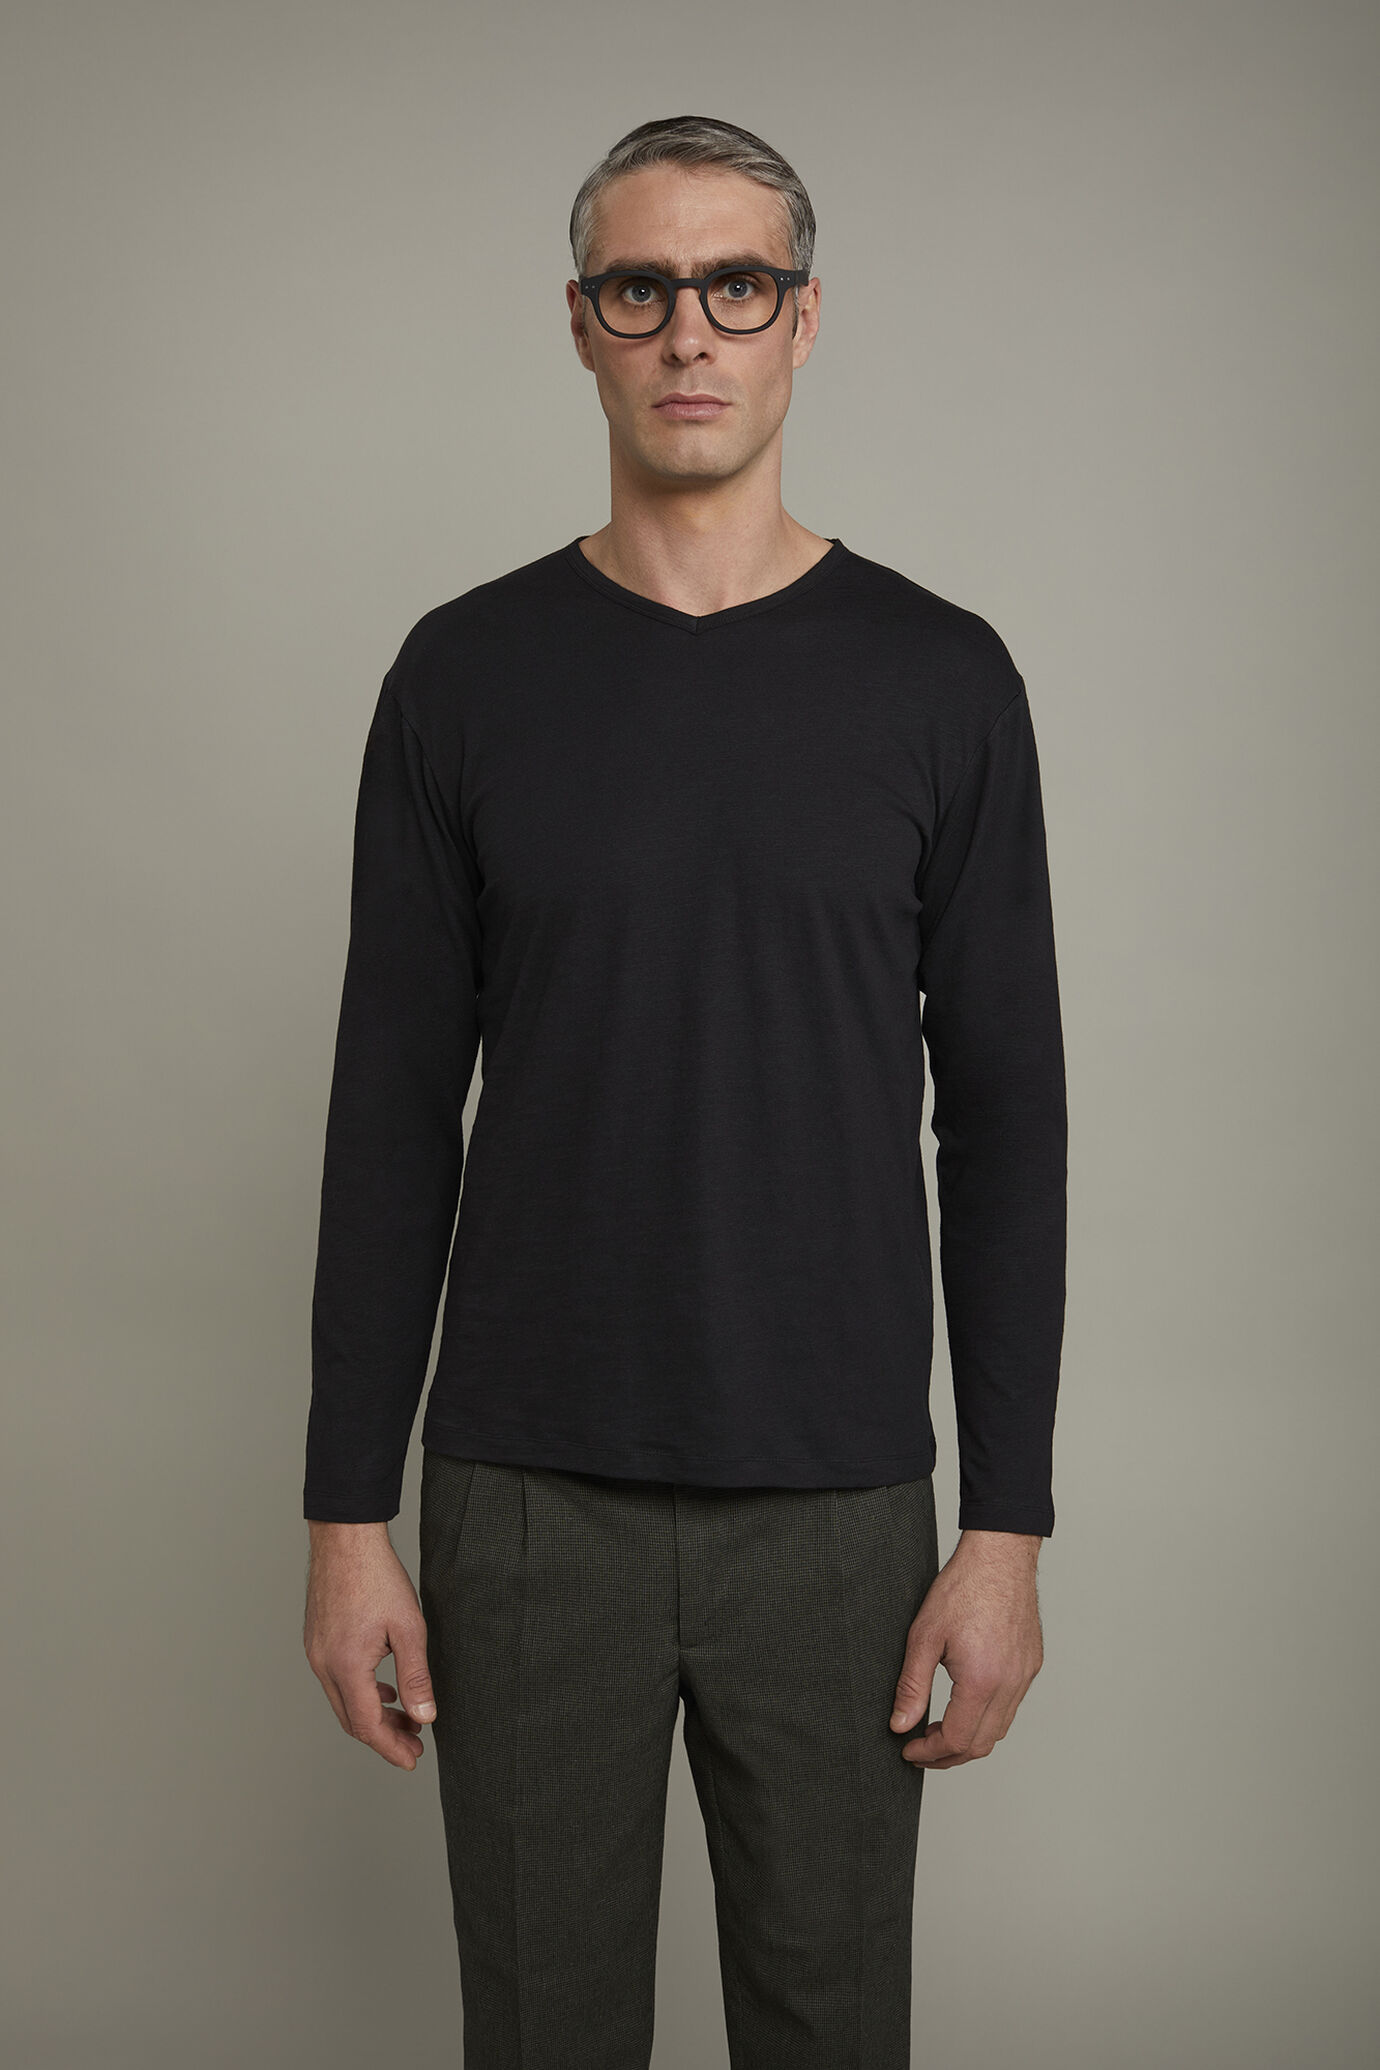 Men’s v-neck t-shirt 100% flamed-effect cotton with long sleeves regular fit